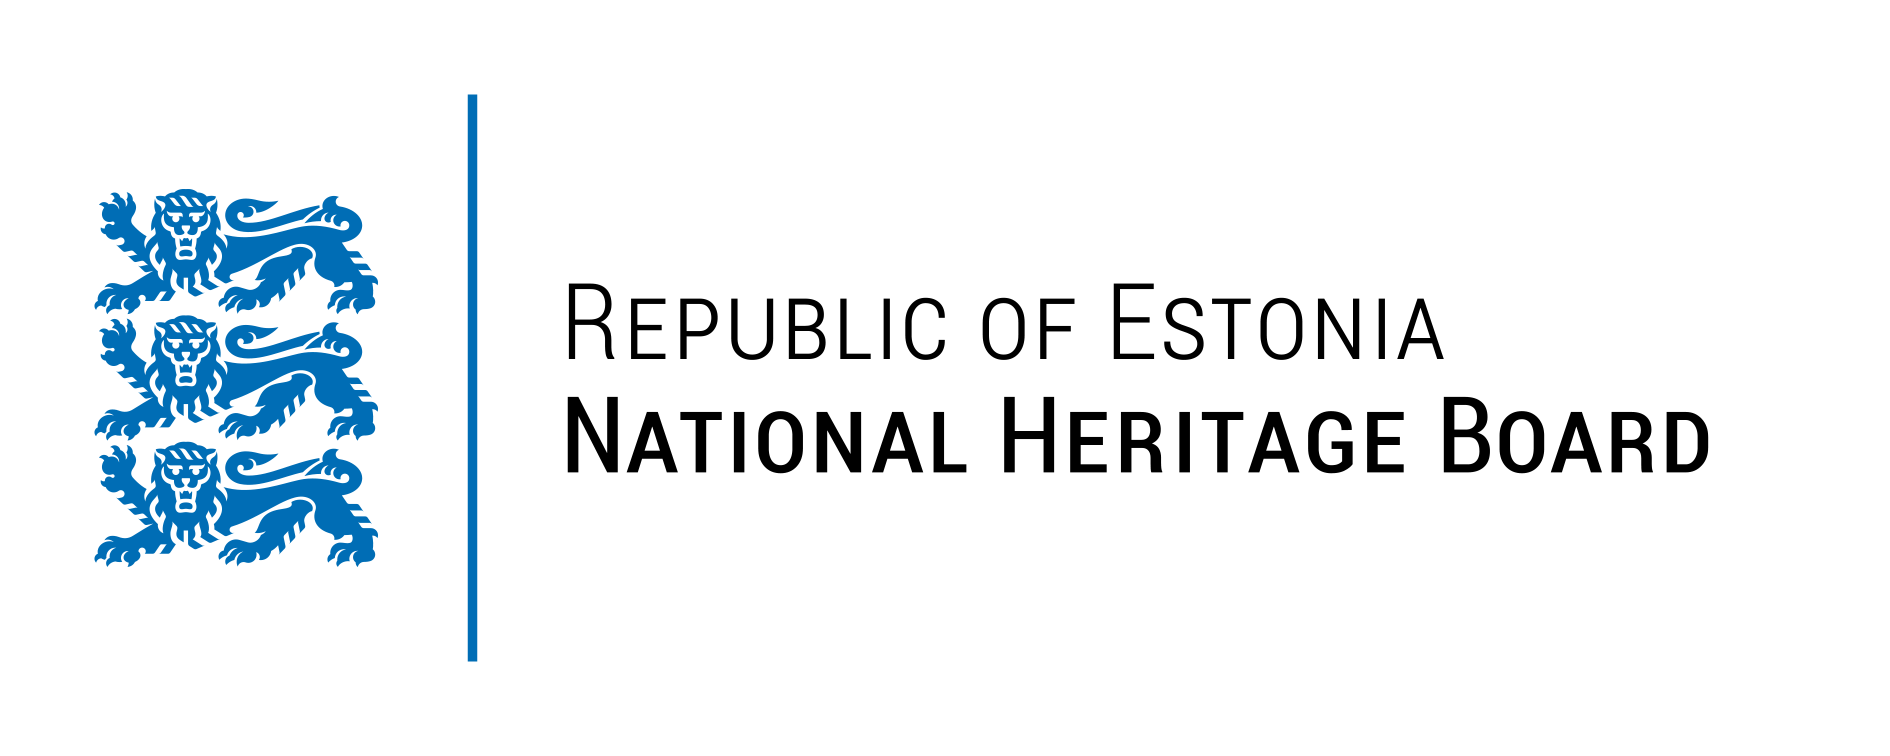 Republic of Estonia National Heritage Board